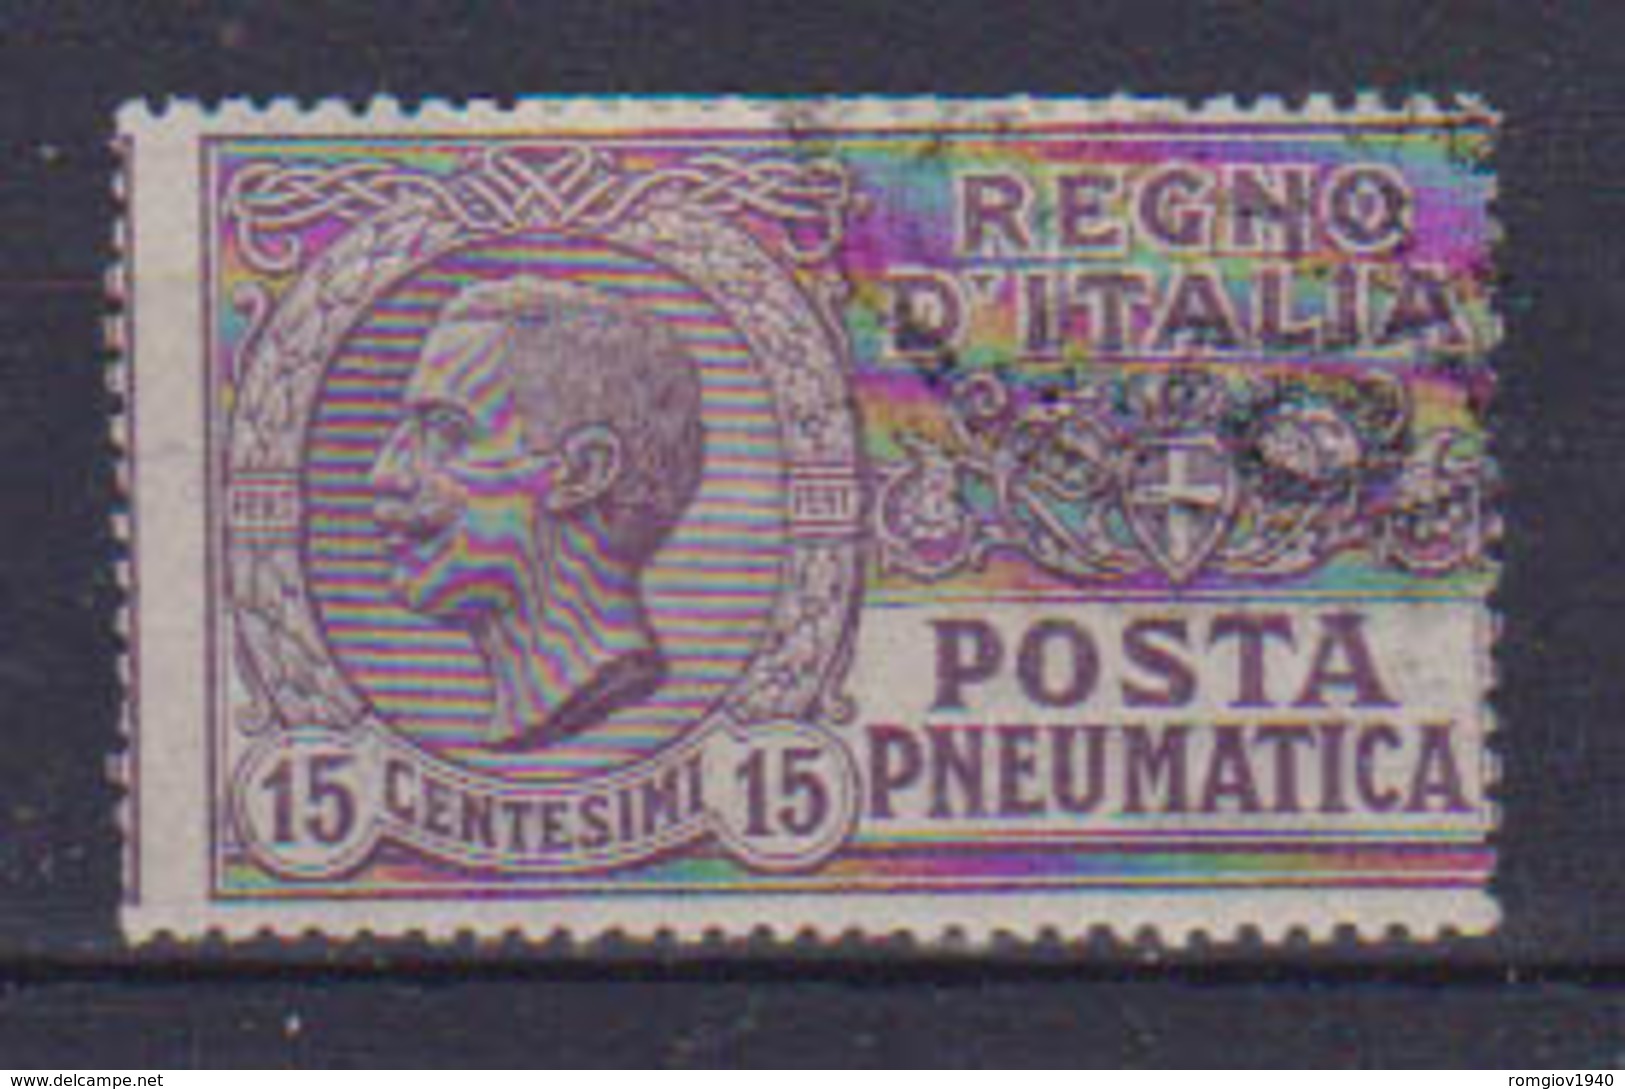 REGNO D'ITALIA POSTA PNEUMATICA 1913-23  EFFIGE DI V.EMANUELE III  SASS. 2 USATO VF - Pneumatic Mail